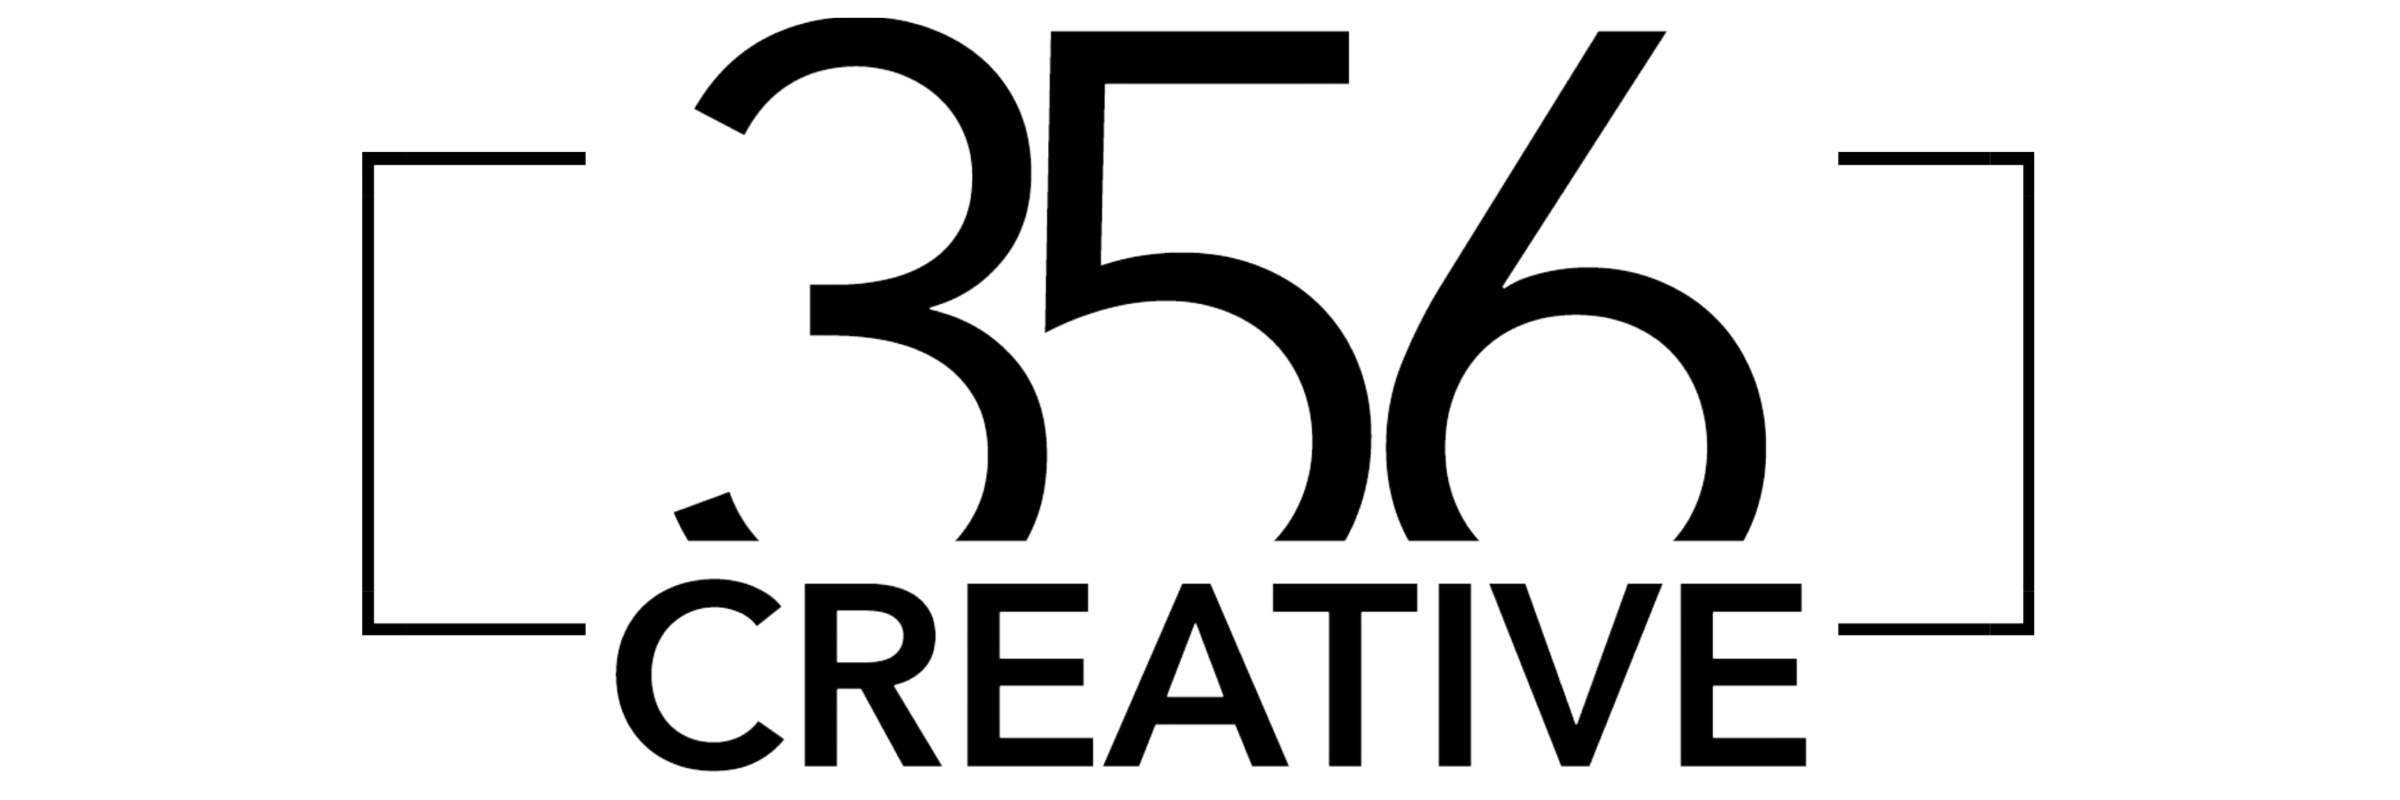 356 Creative